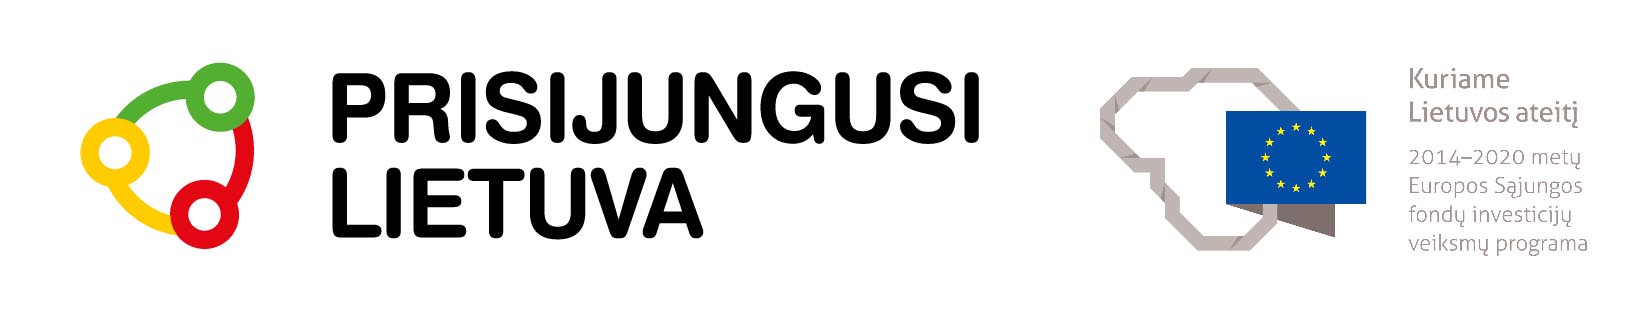 Prisijungusi Lietuva_ES logo_su fonu2